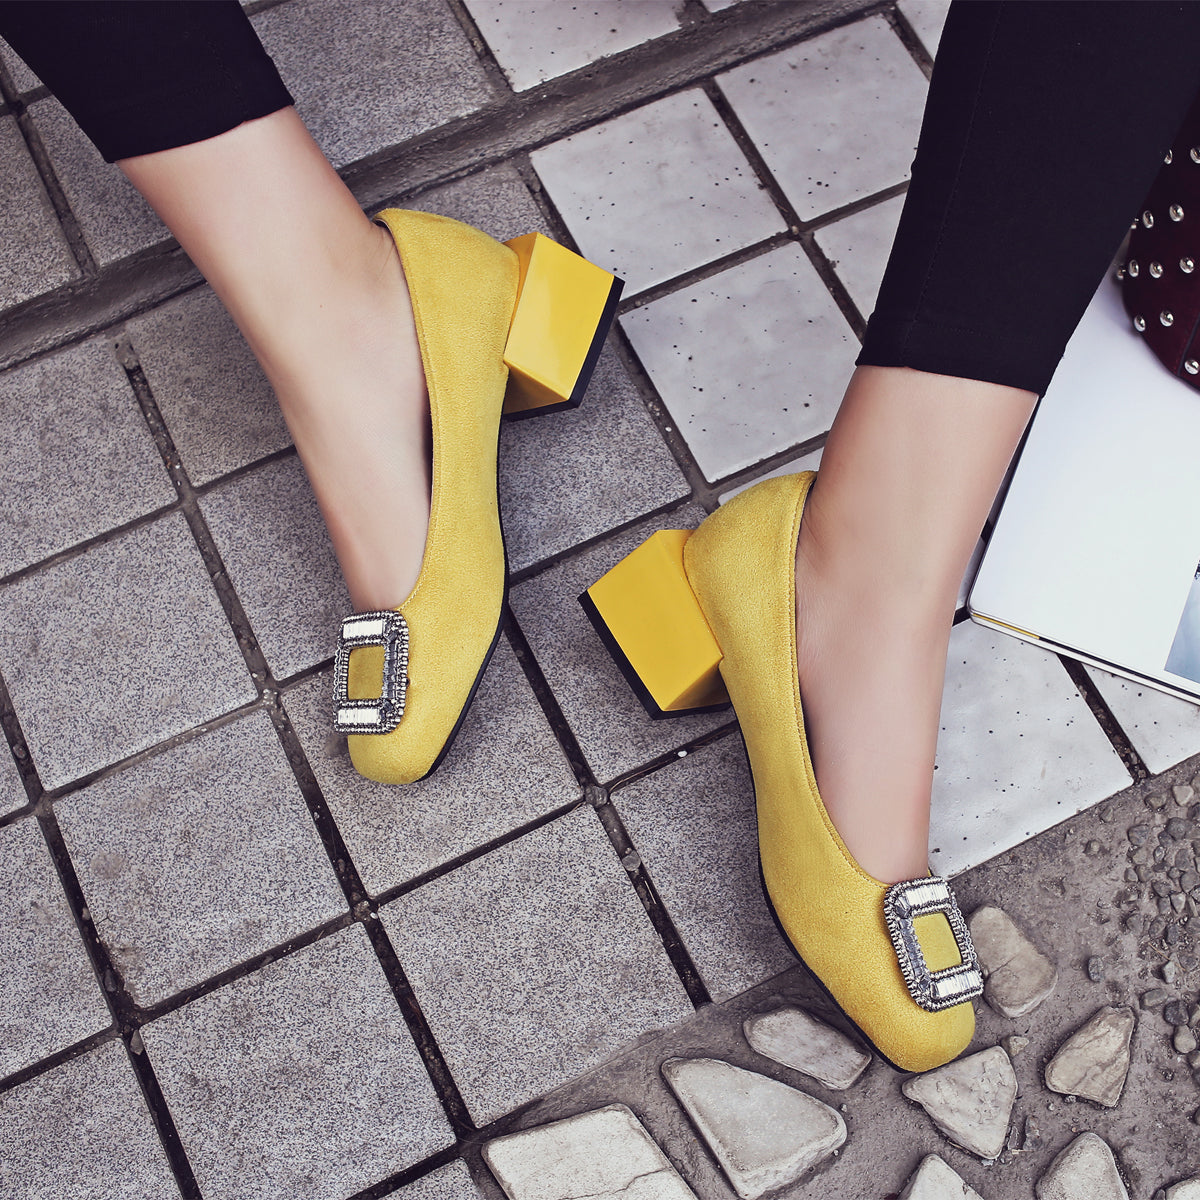 Bigsizeheels Women's square toe suede platform shoes - Yellow freeshipping - bigsizeheel®-size5-size15 -All Plus Sizes Available!